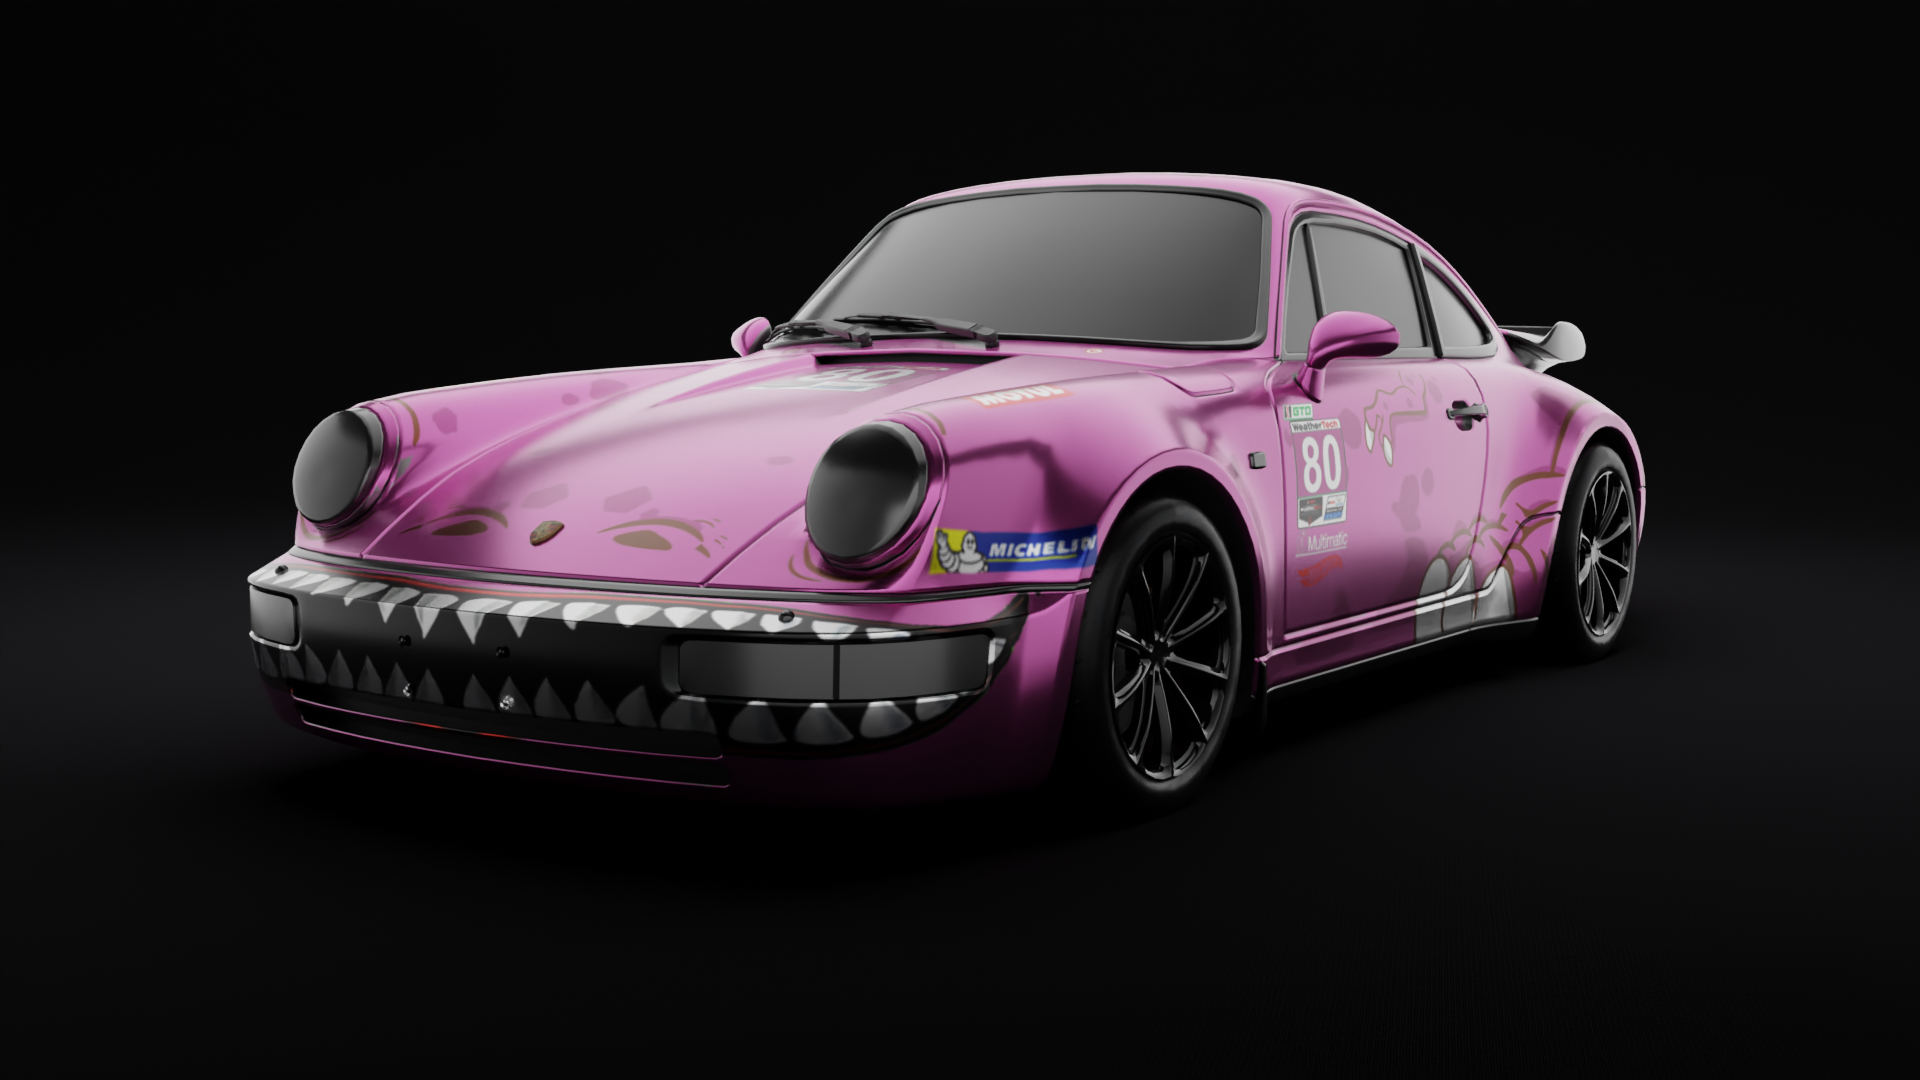 Porsche Livery – Roxy version